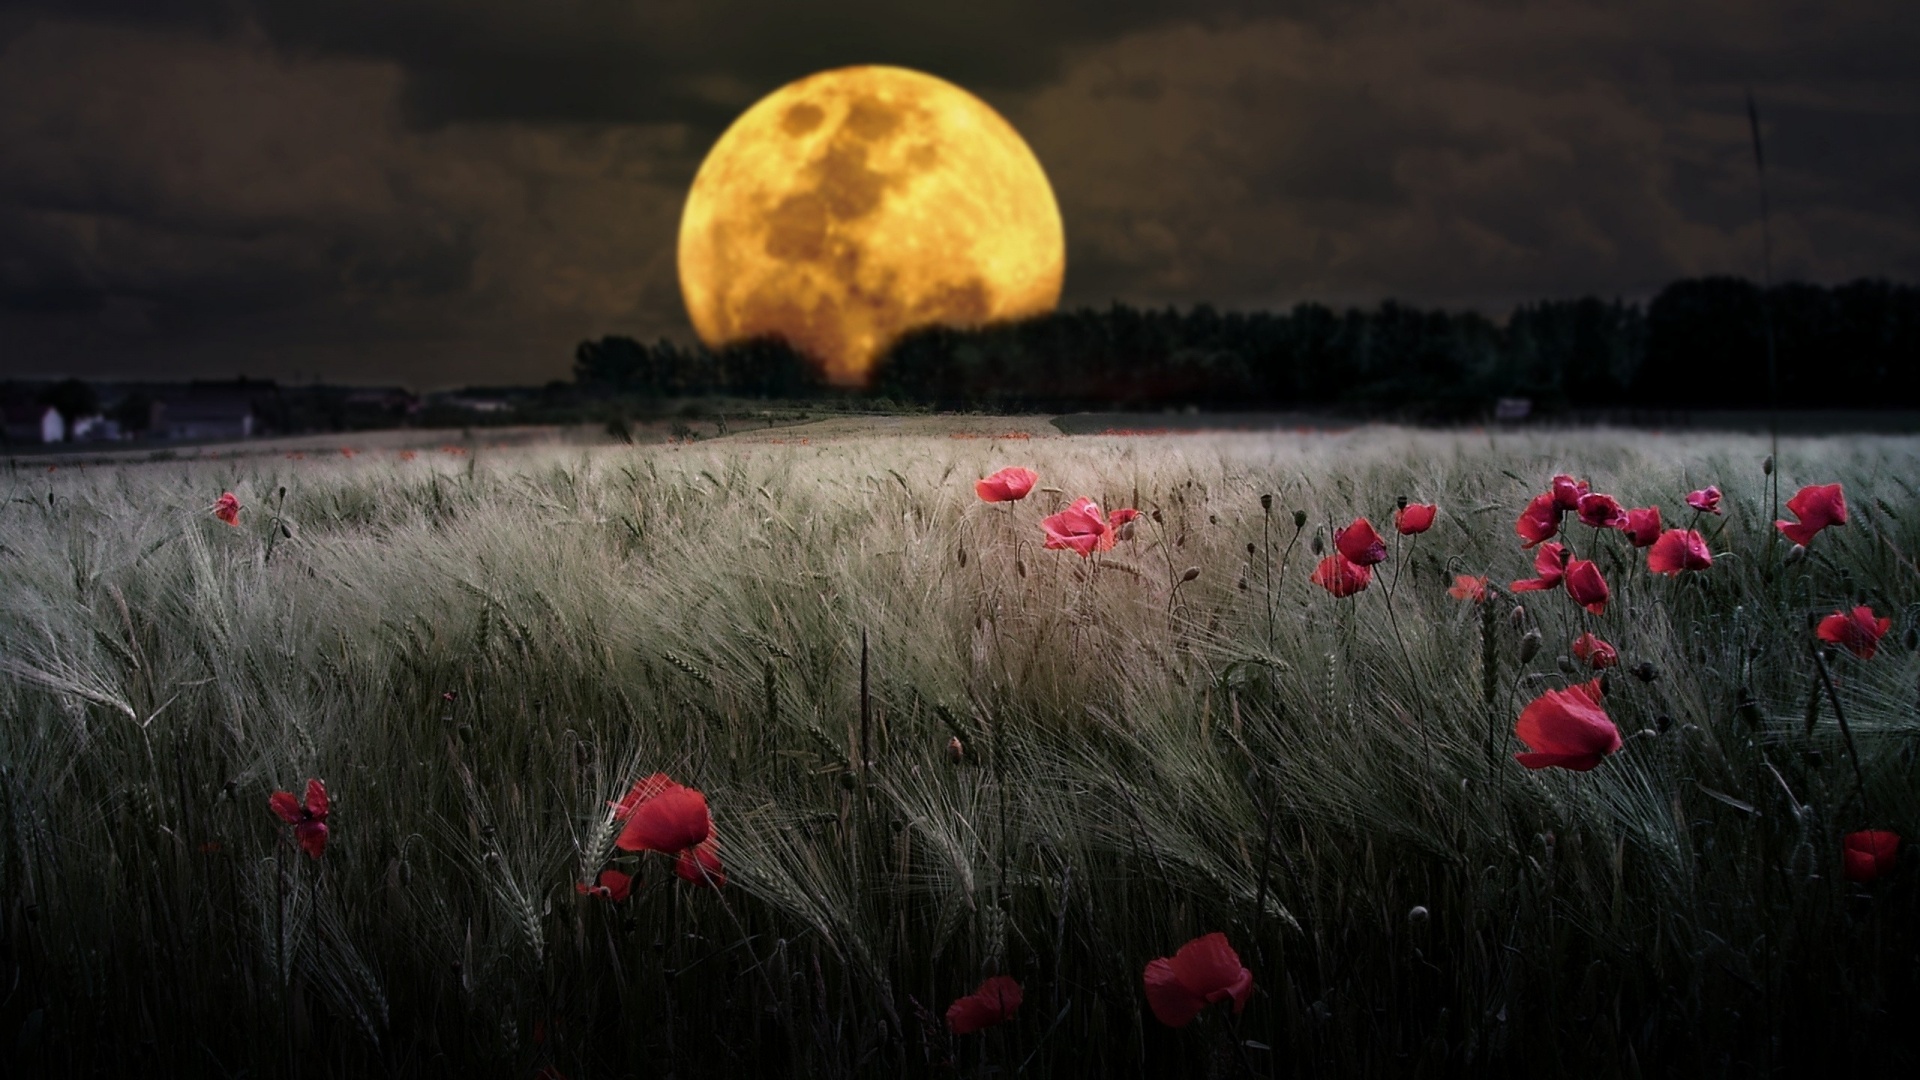 ws_Dark_Night_Moon_Poppy_Field_1920x1080